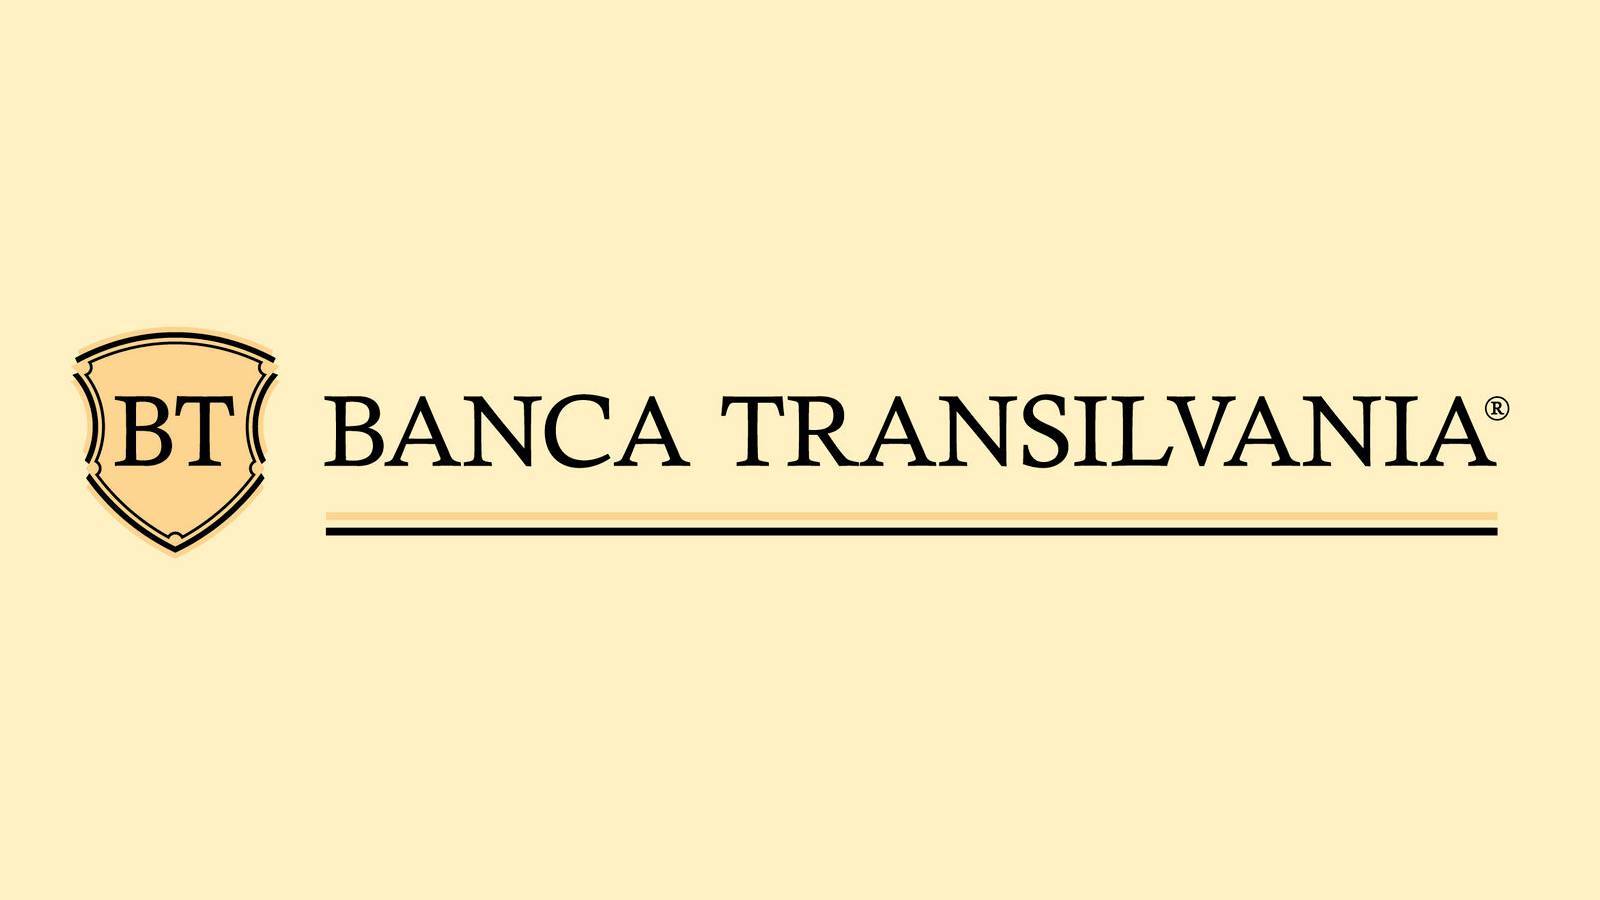 Informazioni BANCA Transilvania ATTENZIONE IMMEDIATA ai Clienti Rumeni